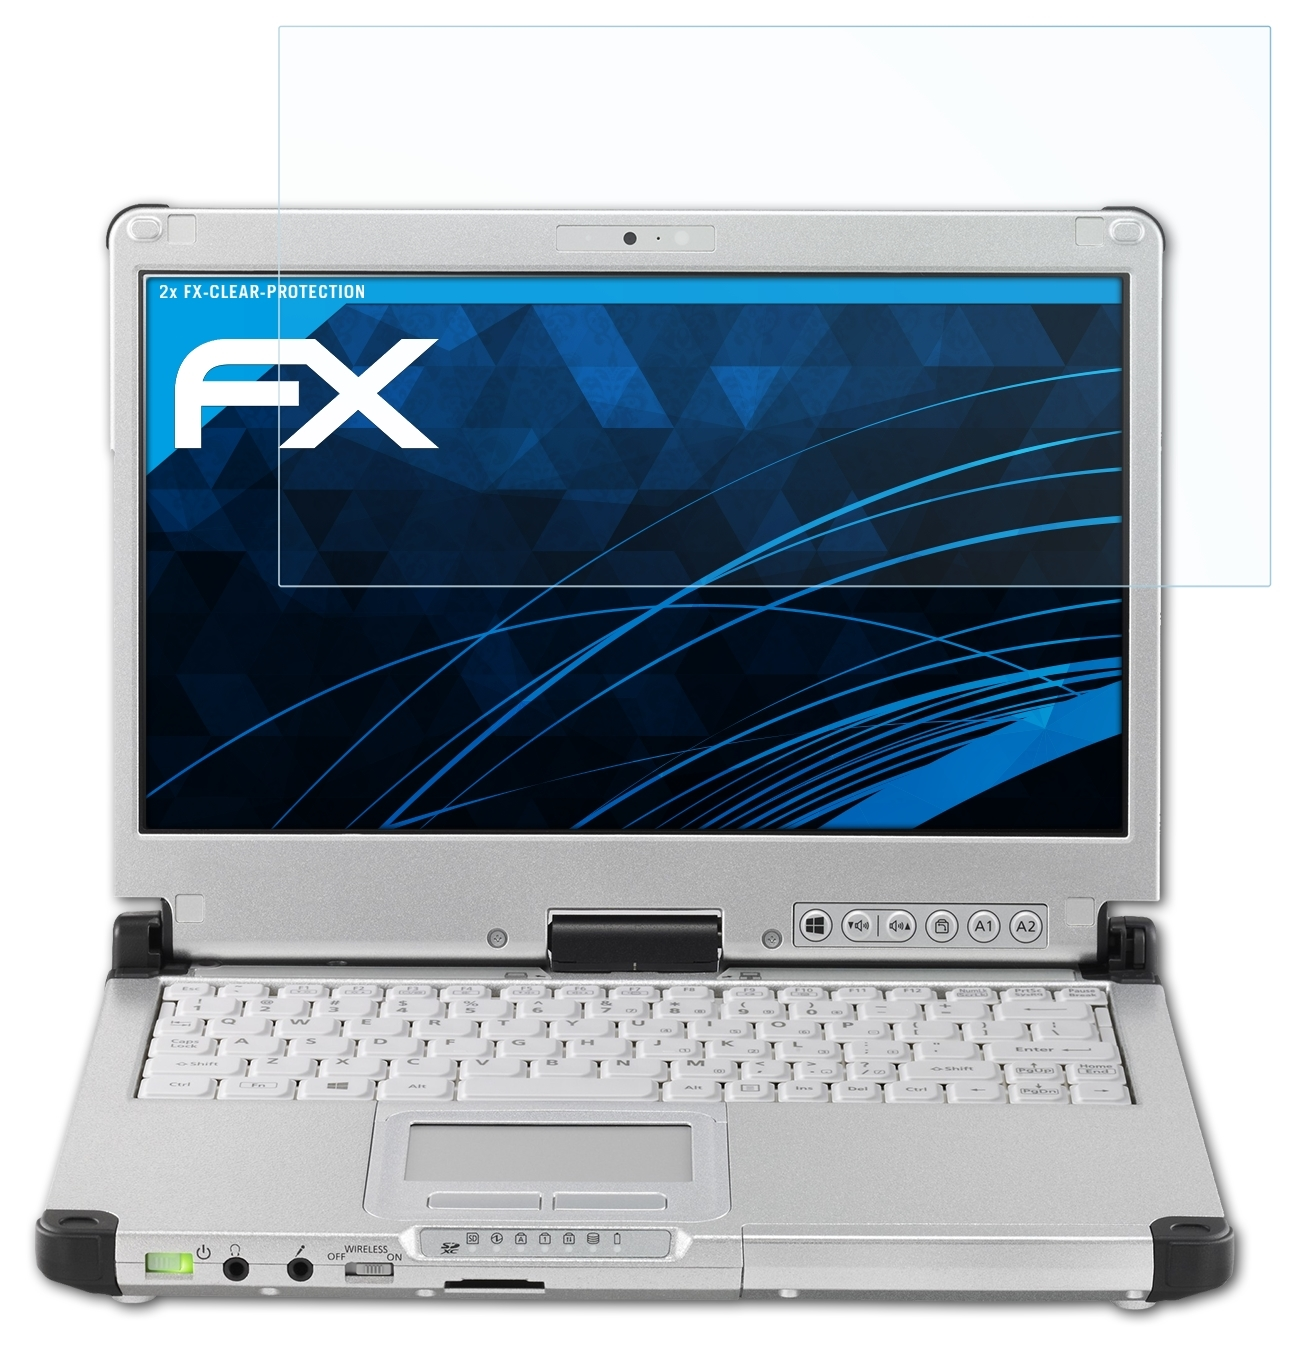 Panasonic CF-C2) FX-Clear ATFOLIX Displayschutz(für ToughBook 2x